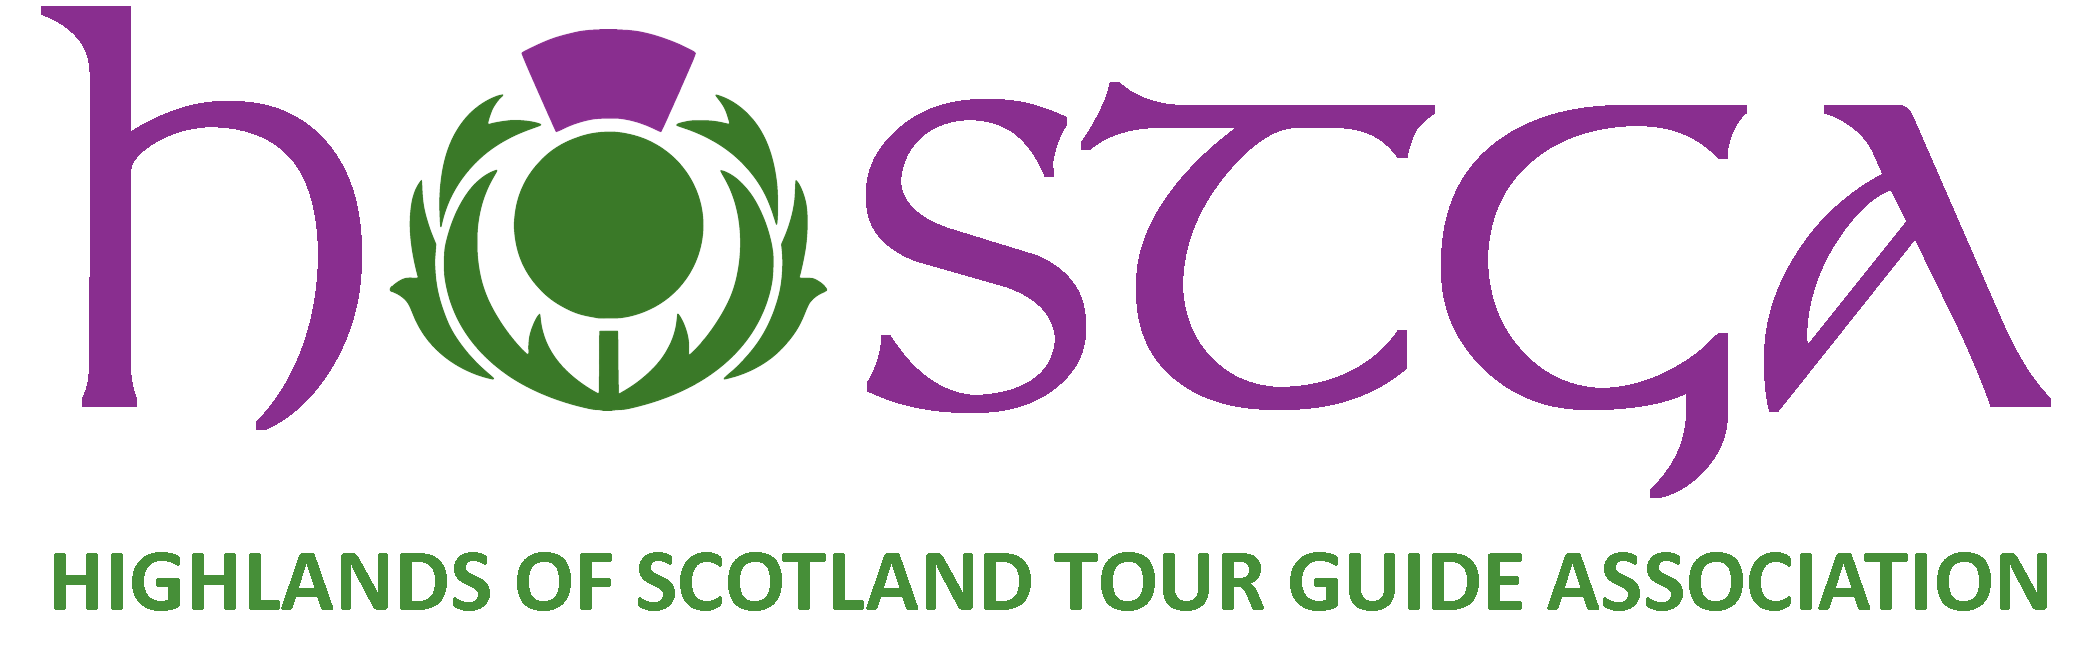 blue badge tour guide course scotland